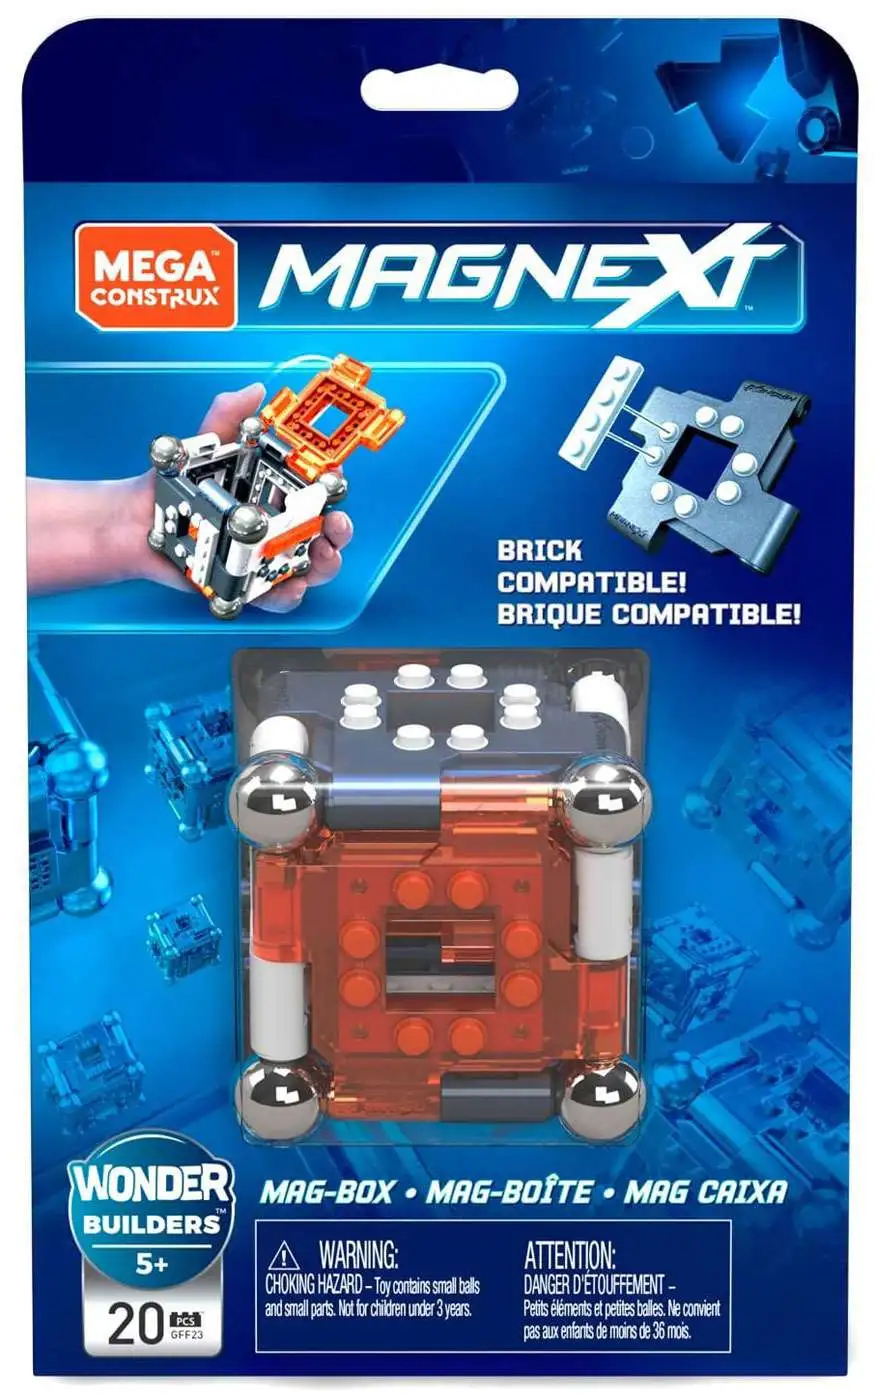 Mega Construx Vibrant Box Small Blocks Buildable Bricks Green Blue Yellow Toy 